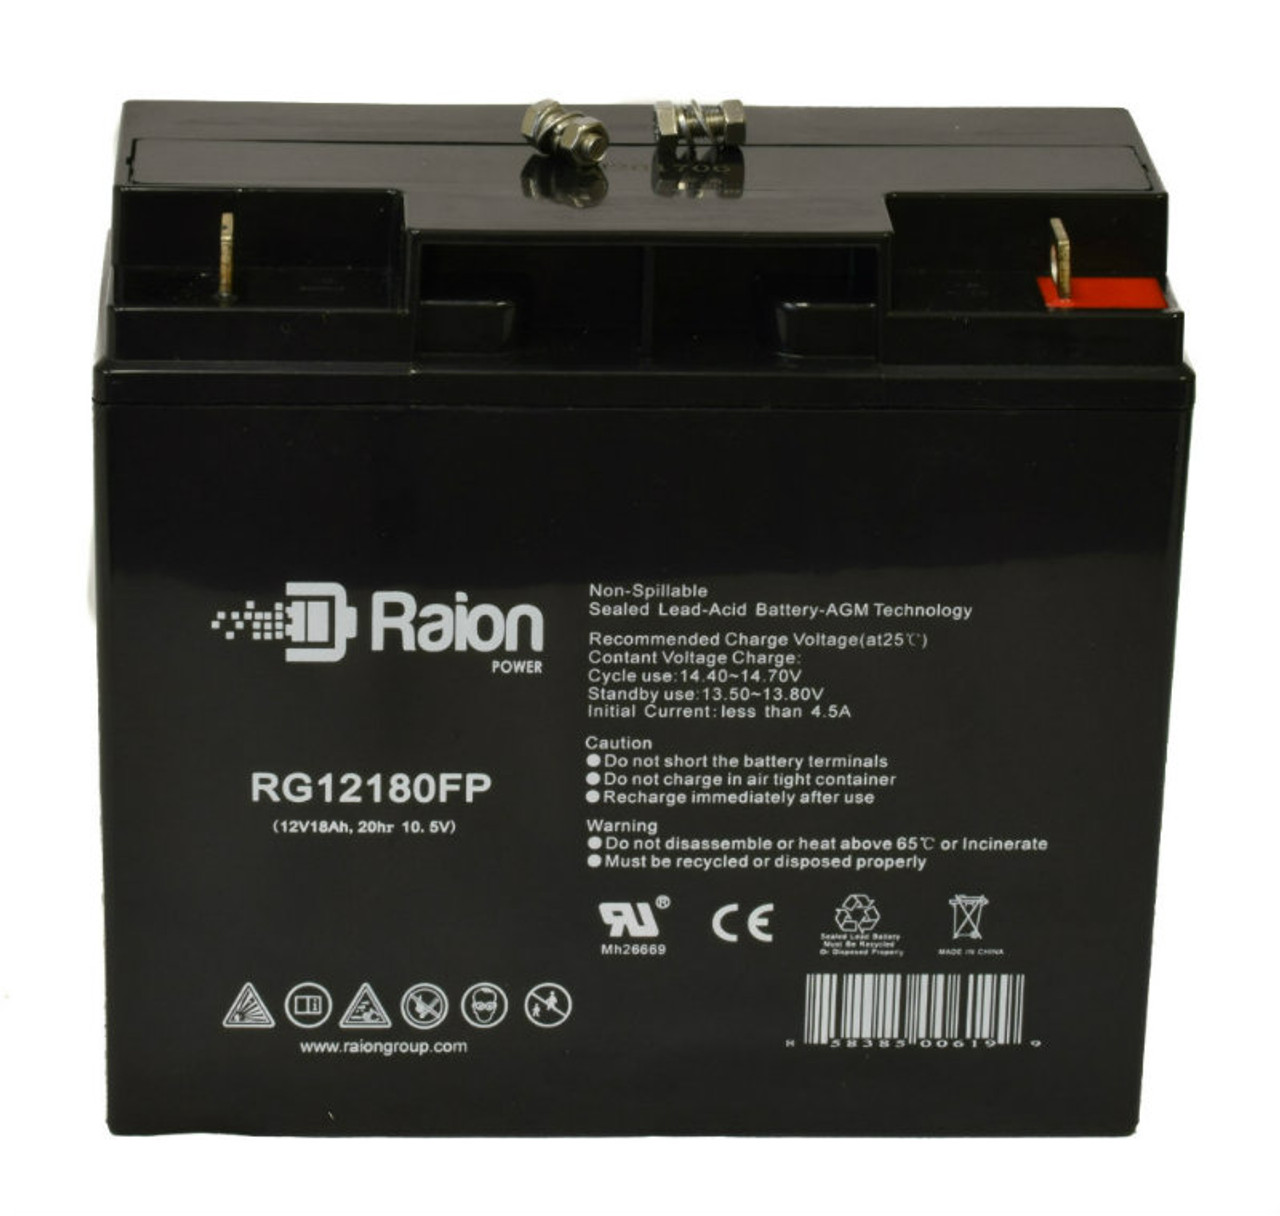 Raion Power RG12180FP 12V 18Ah Lead Acid Battery for Daymak Beijing